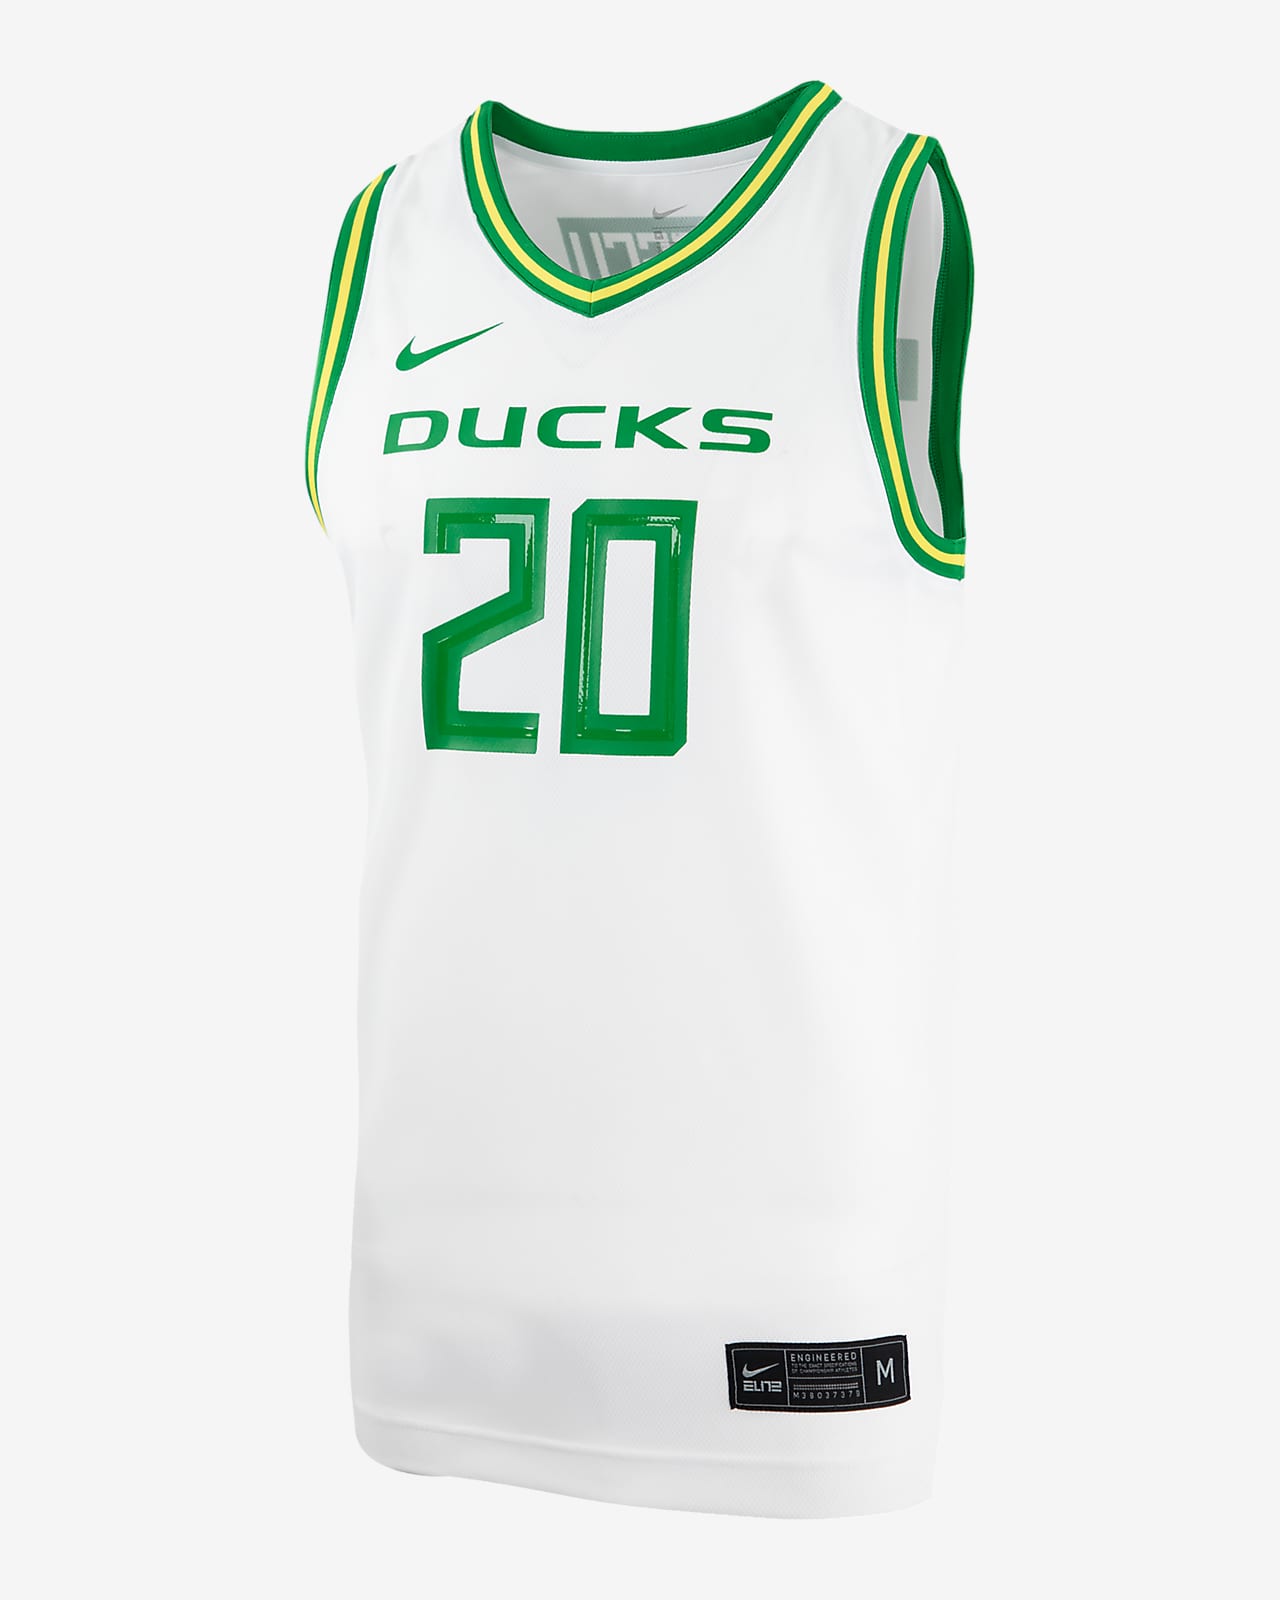 oregon ducks basketball jersey